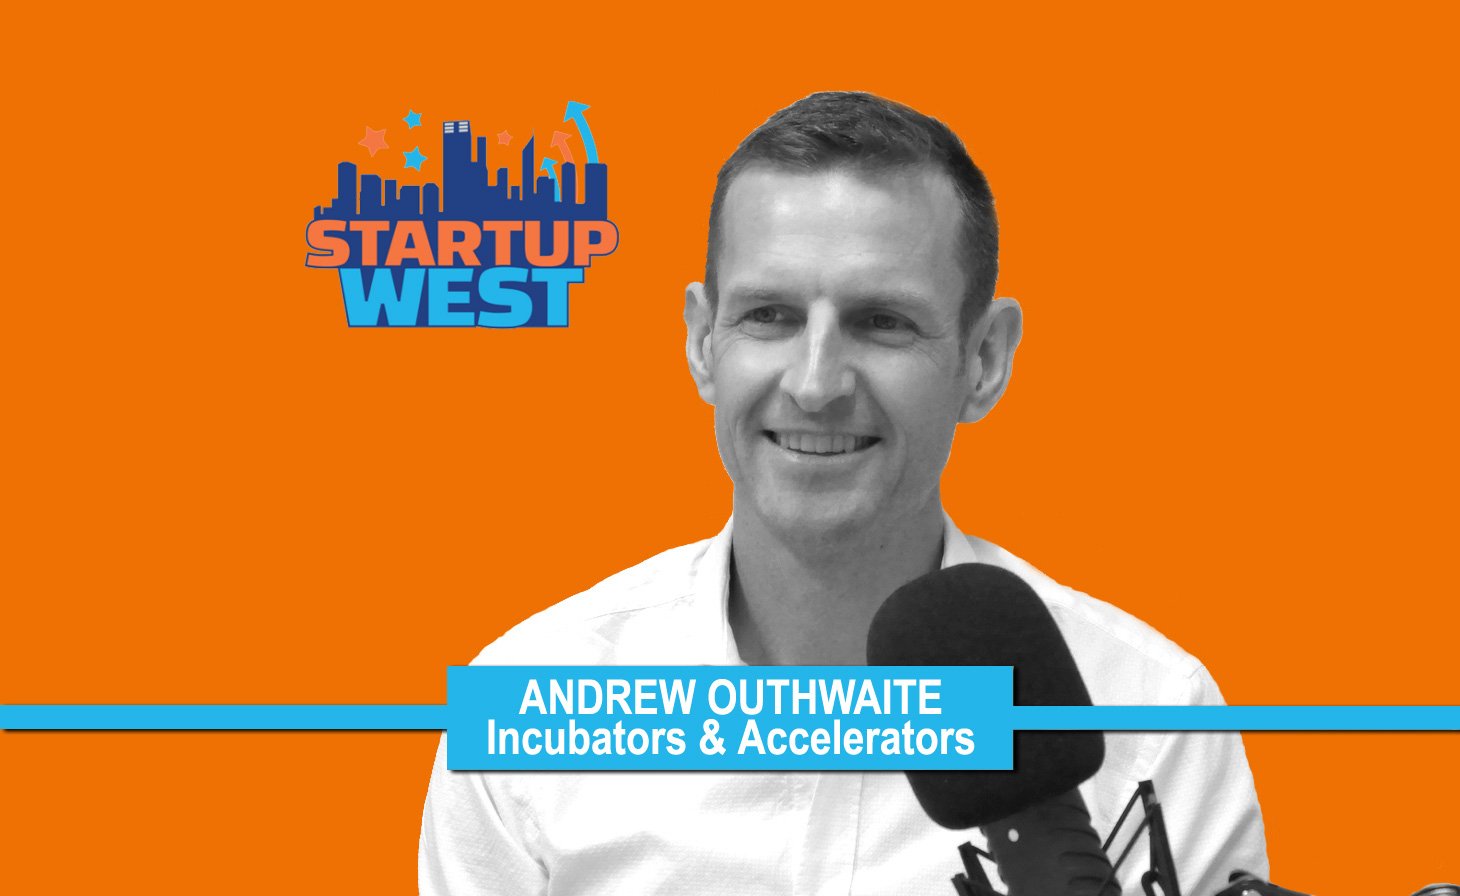 Andrew Outhwaite